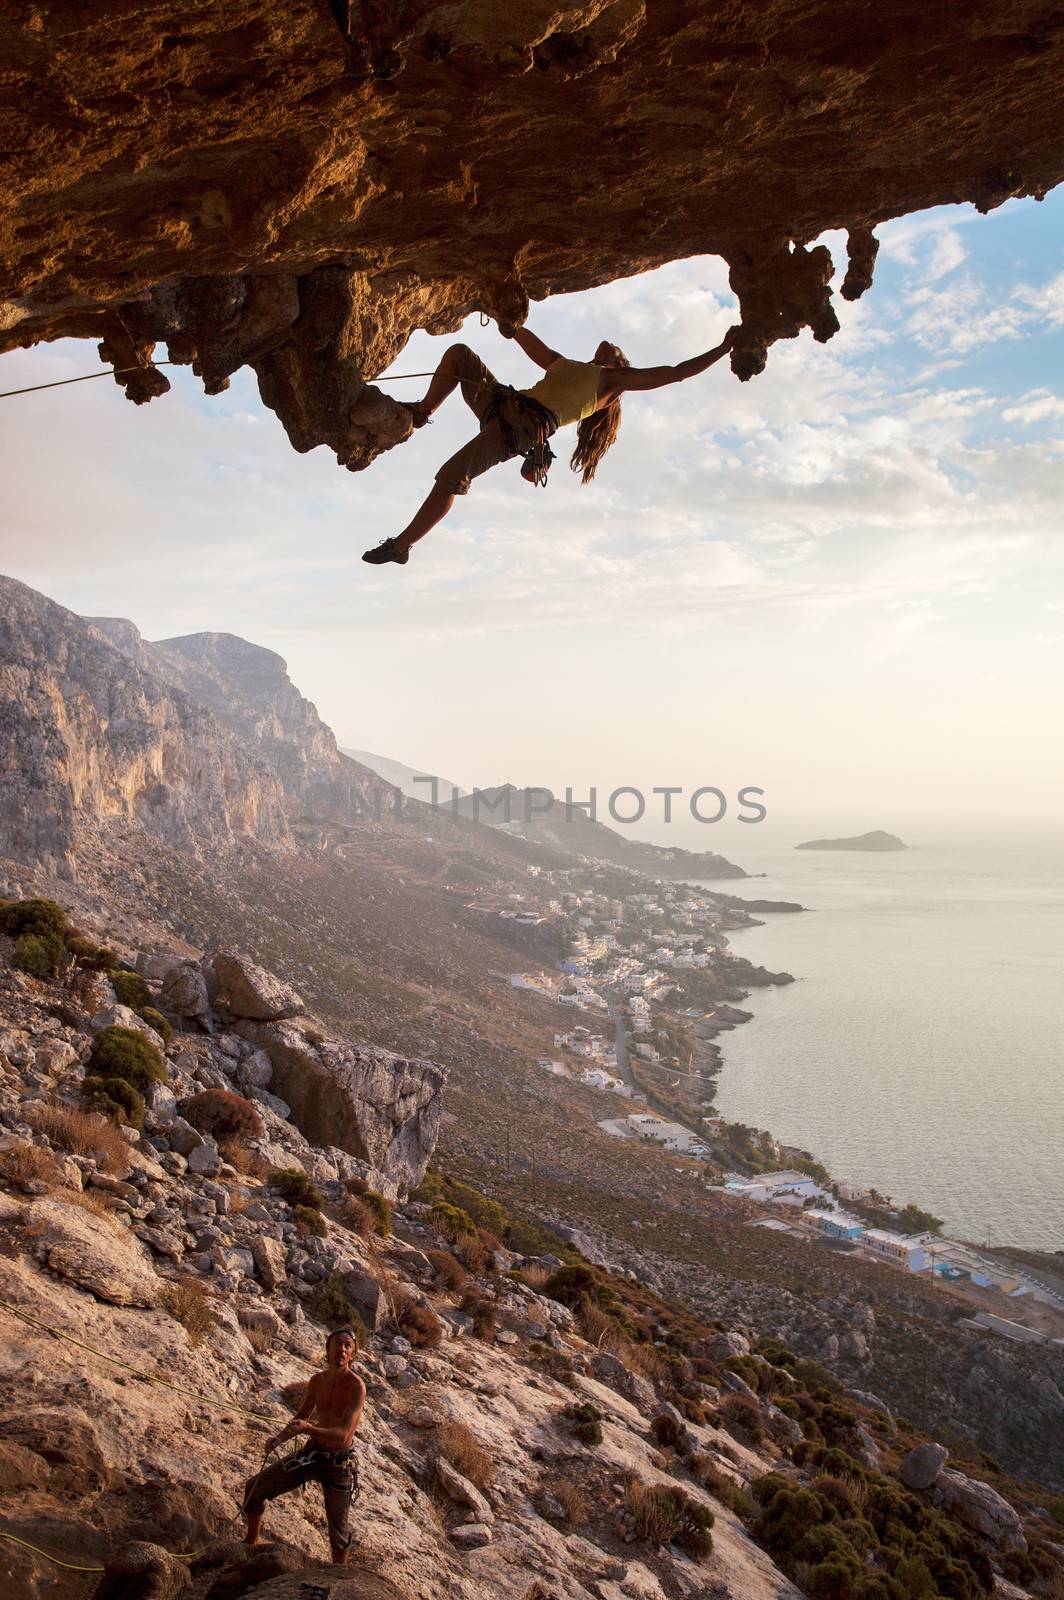 Rock climber at sunset, Kalymnos, Greece by photobac